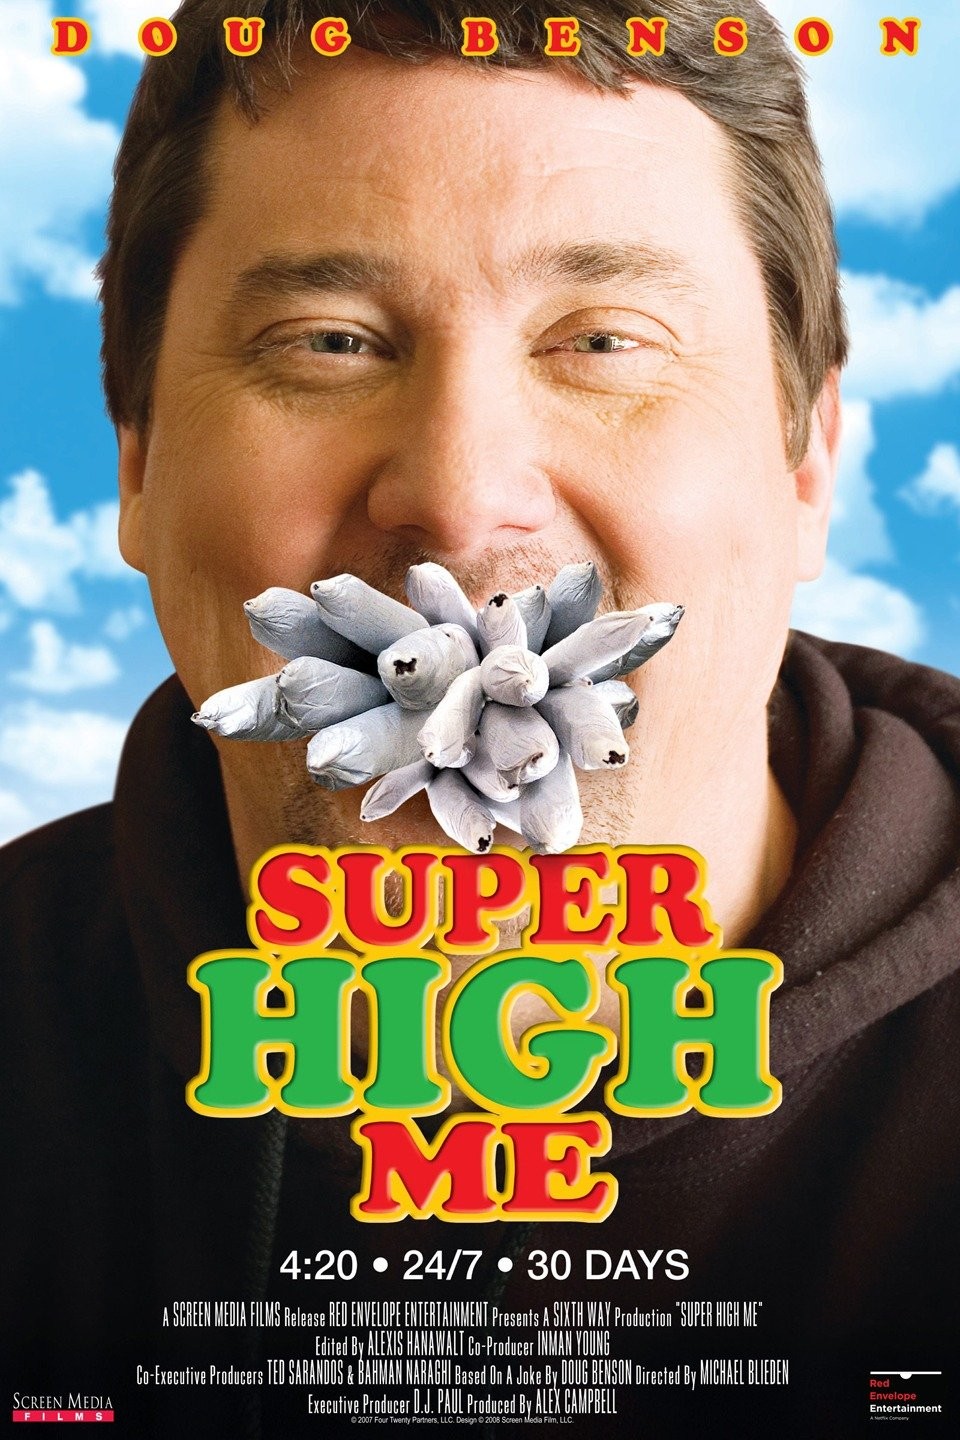 SXSW Review: SUPER HIGH ME